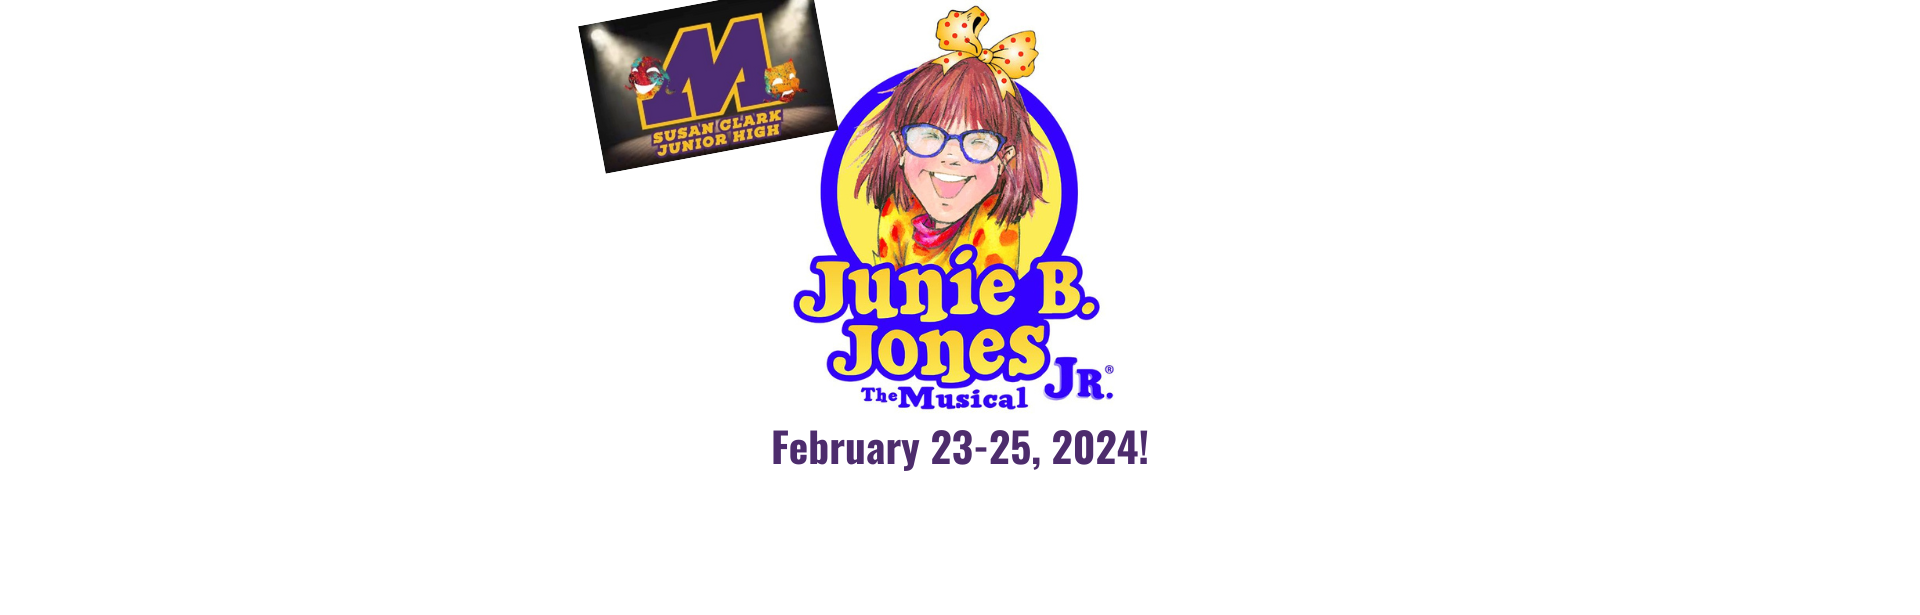 Susan Clark Jr. High Theatre Dept. presents “Junie B. Jones The Musical Jr.”